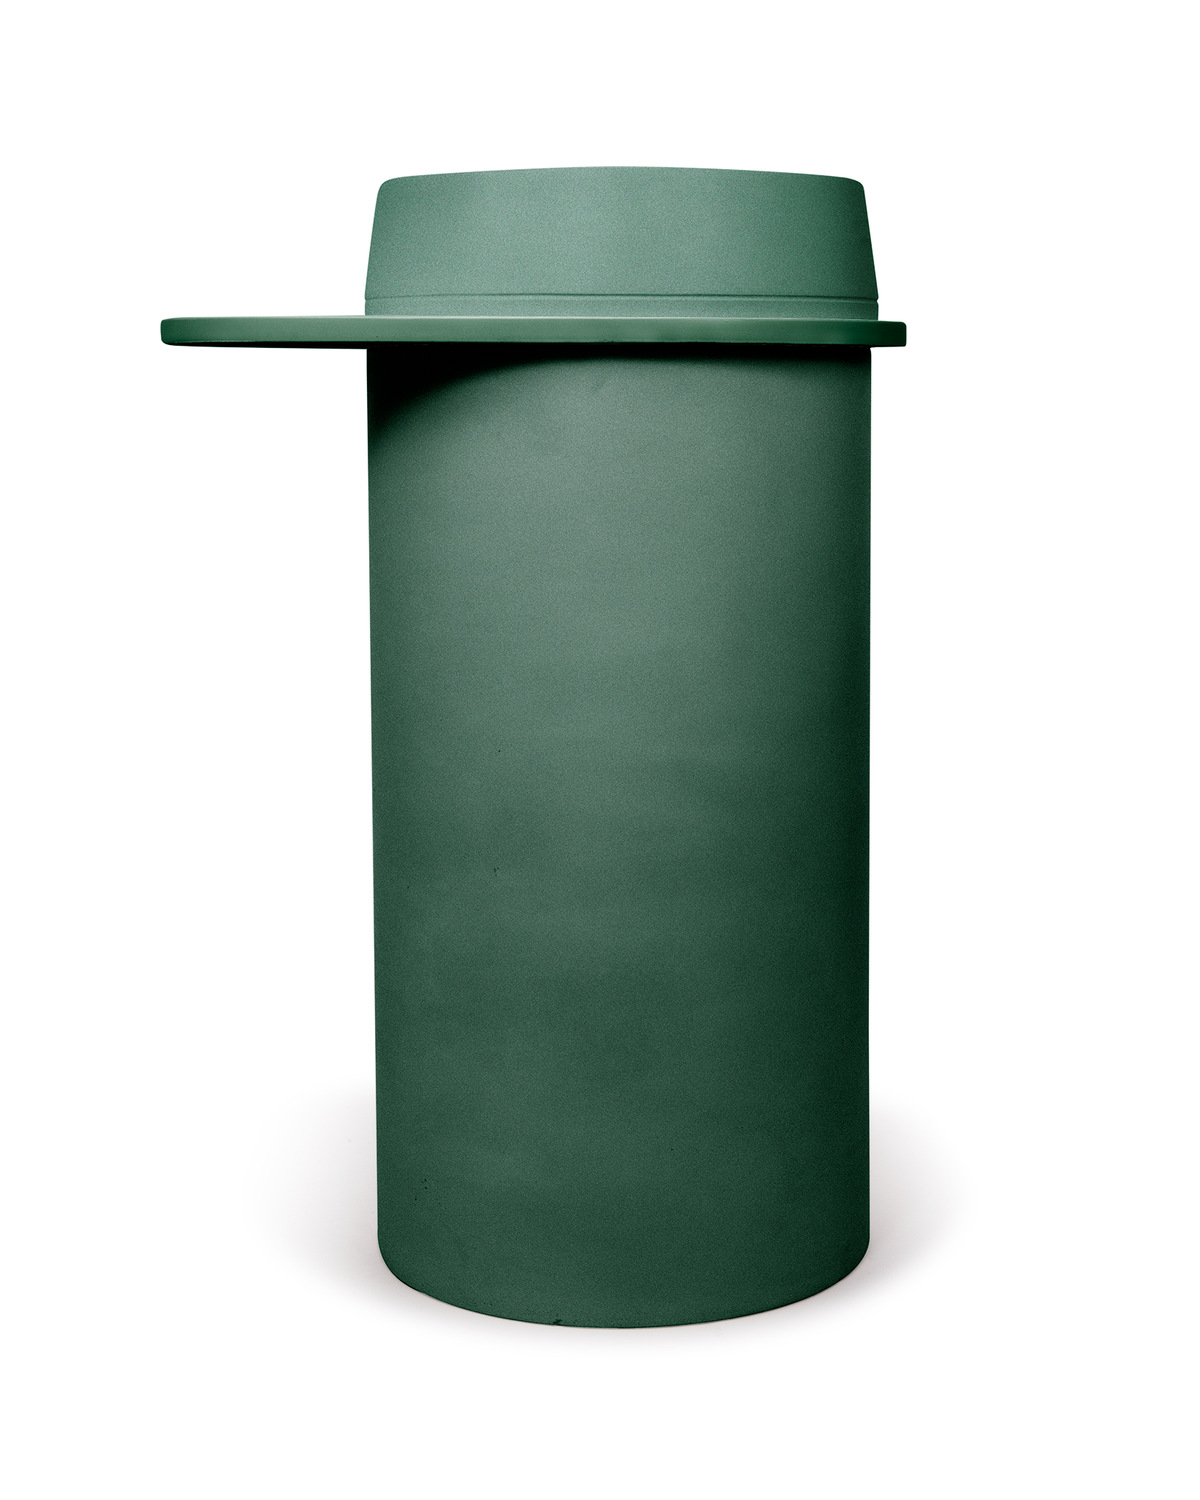 Cylinder - Funl Basin (Teal)